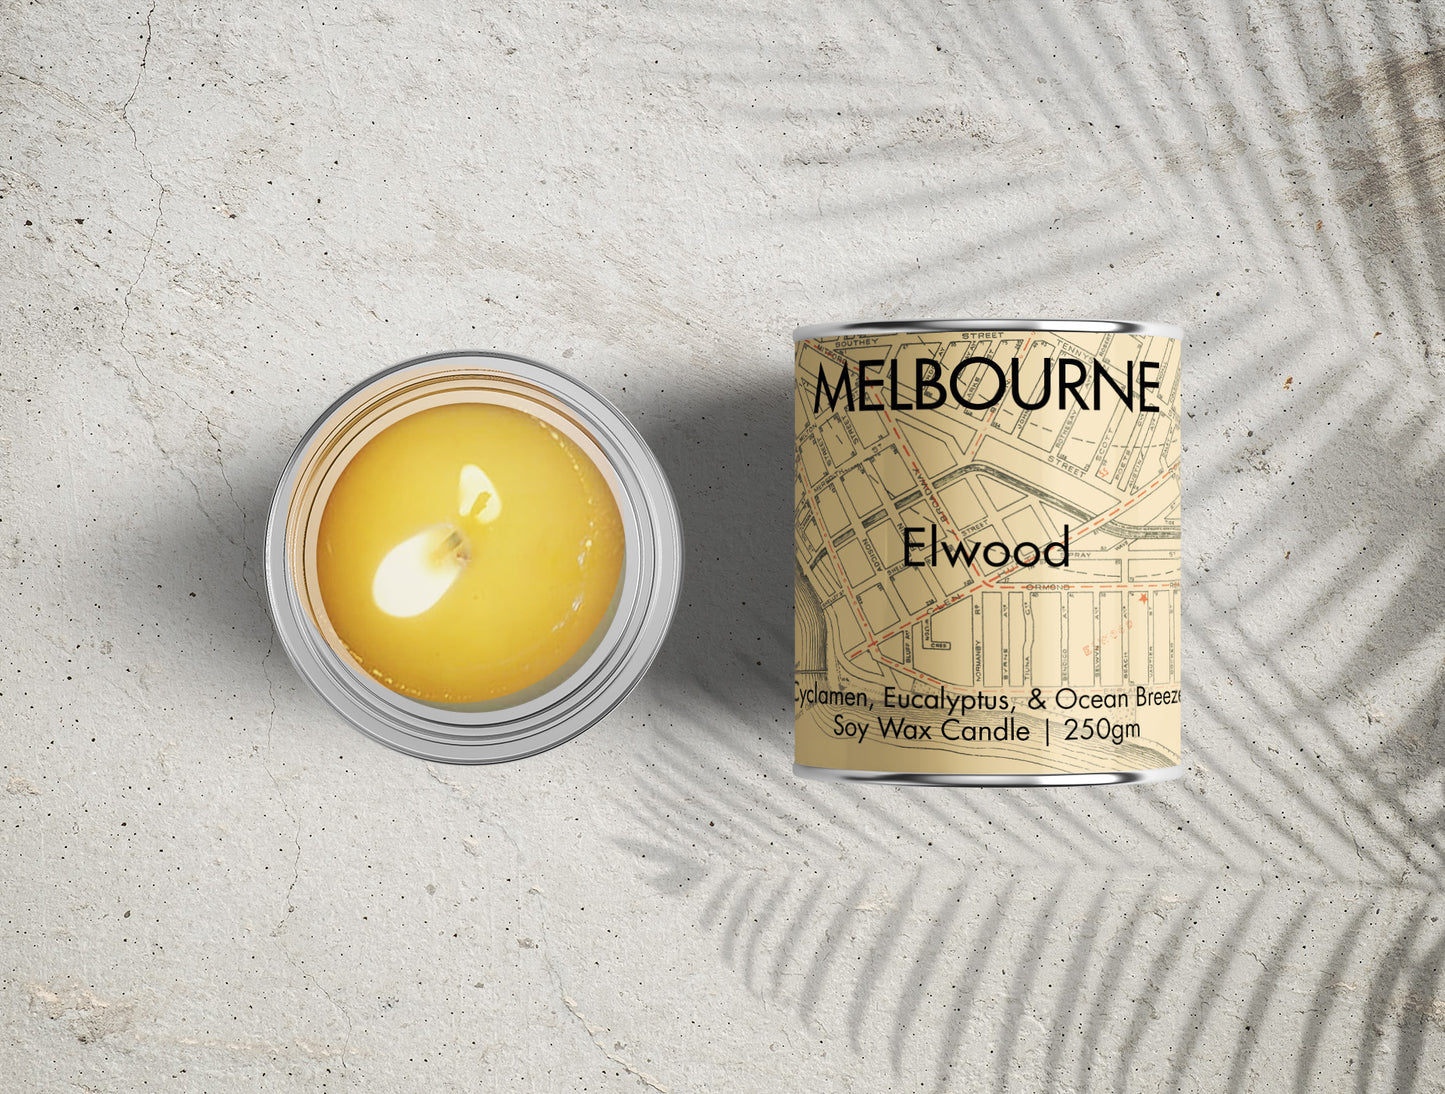 Elwood - Cyclamen, Eucalyptus, & Ocean Breeze